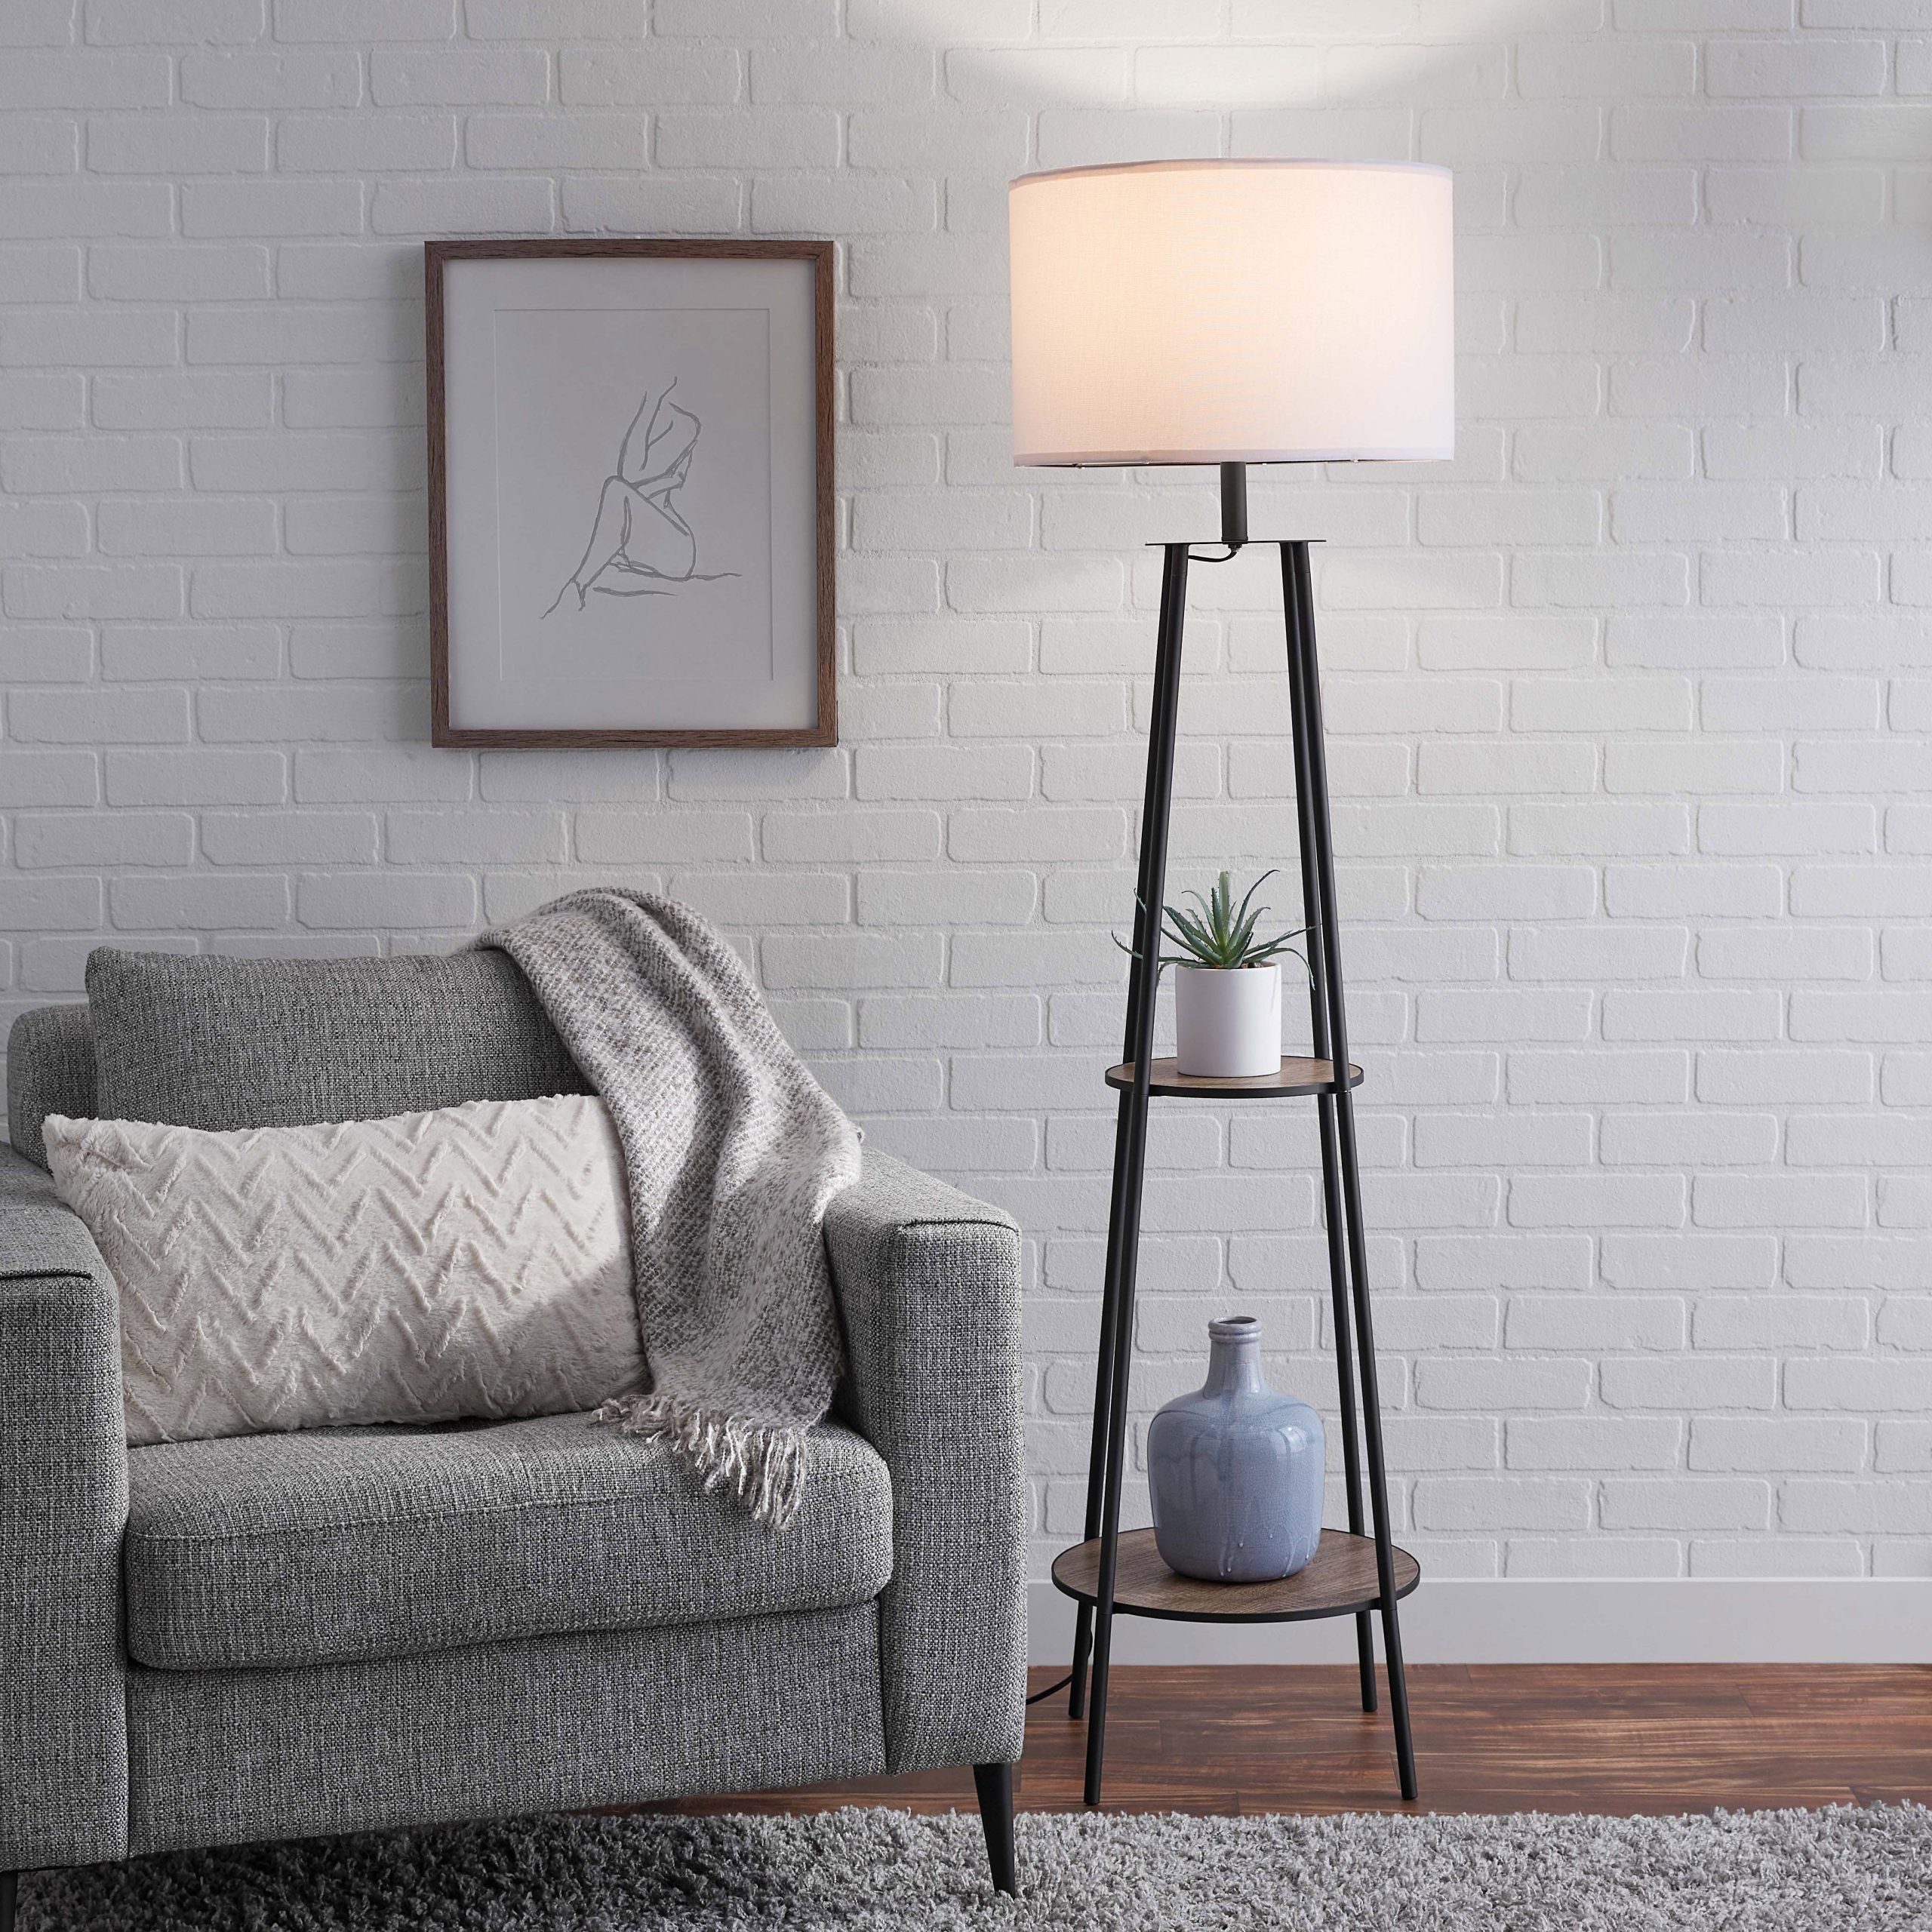 Mainstays Etagere Matte Black Floor Lamp, With 2 Wood Shelves, Black Color  – Walmart Throughout Matte Black Floor Lamps (View 6 of 20)